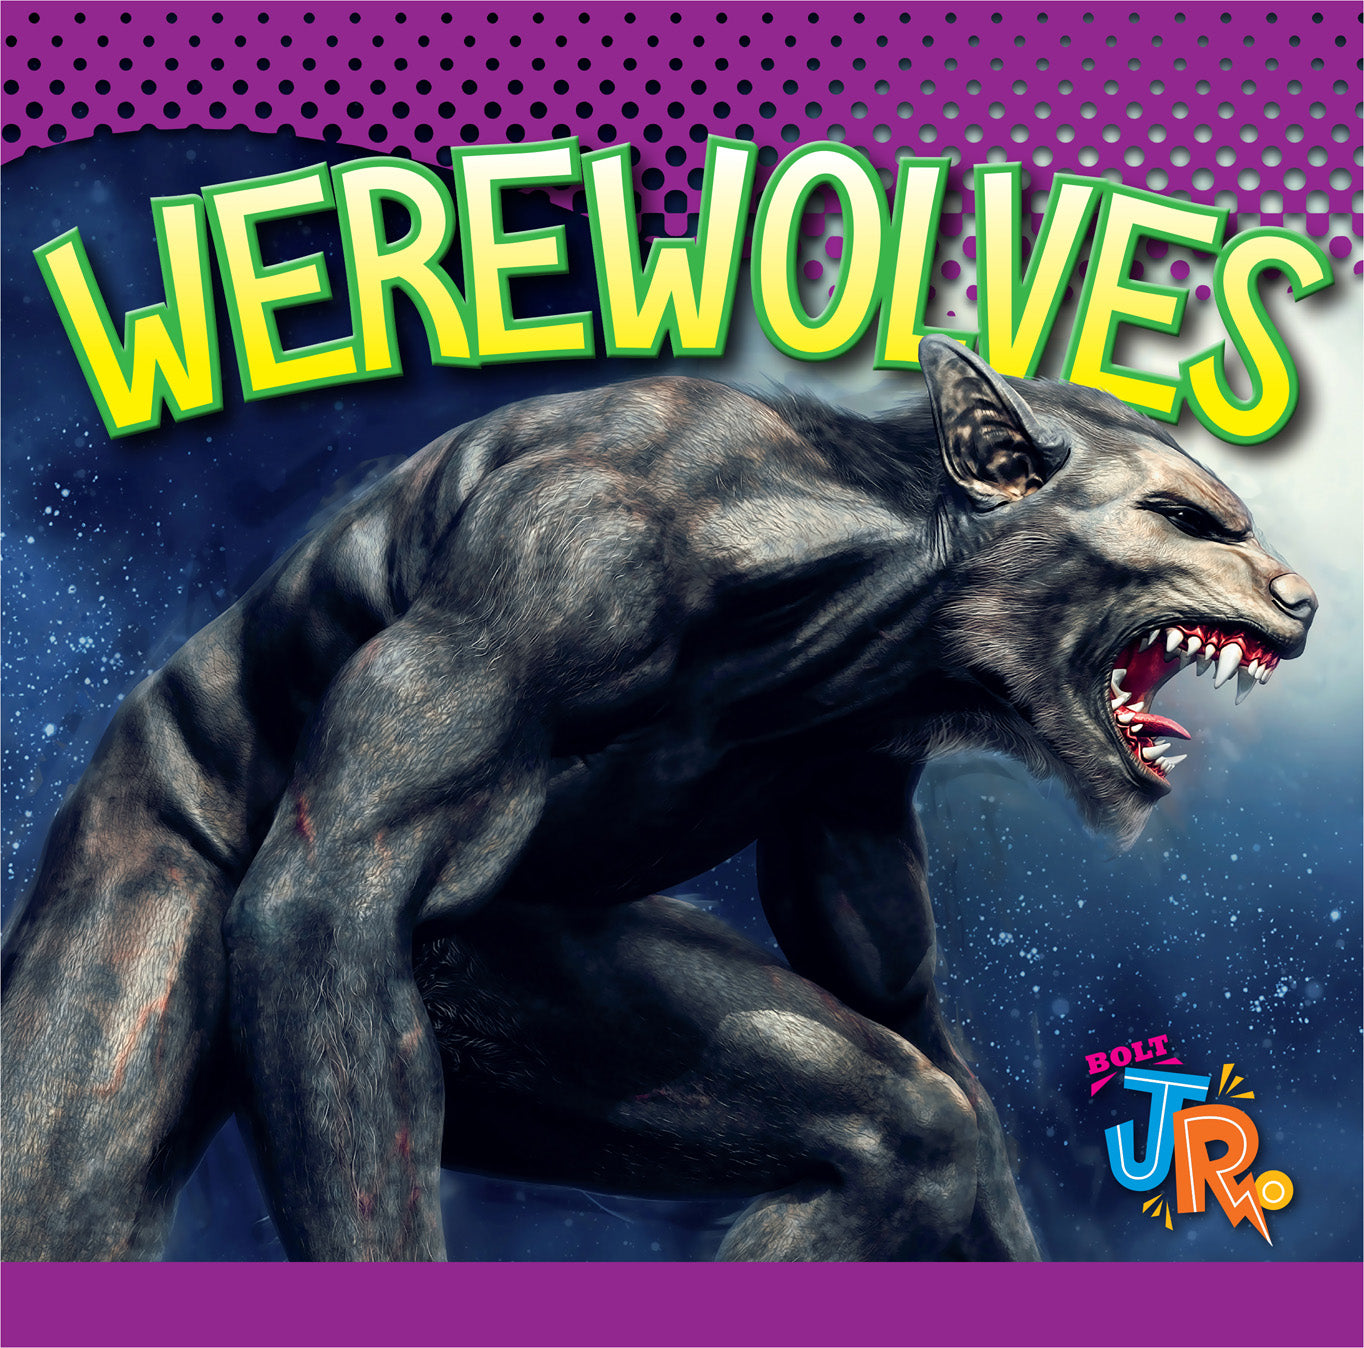 A Little Bit Spooky: Werewolves